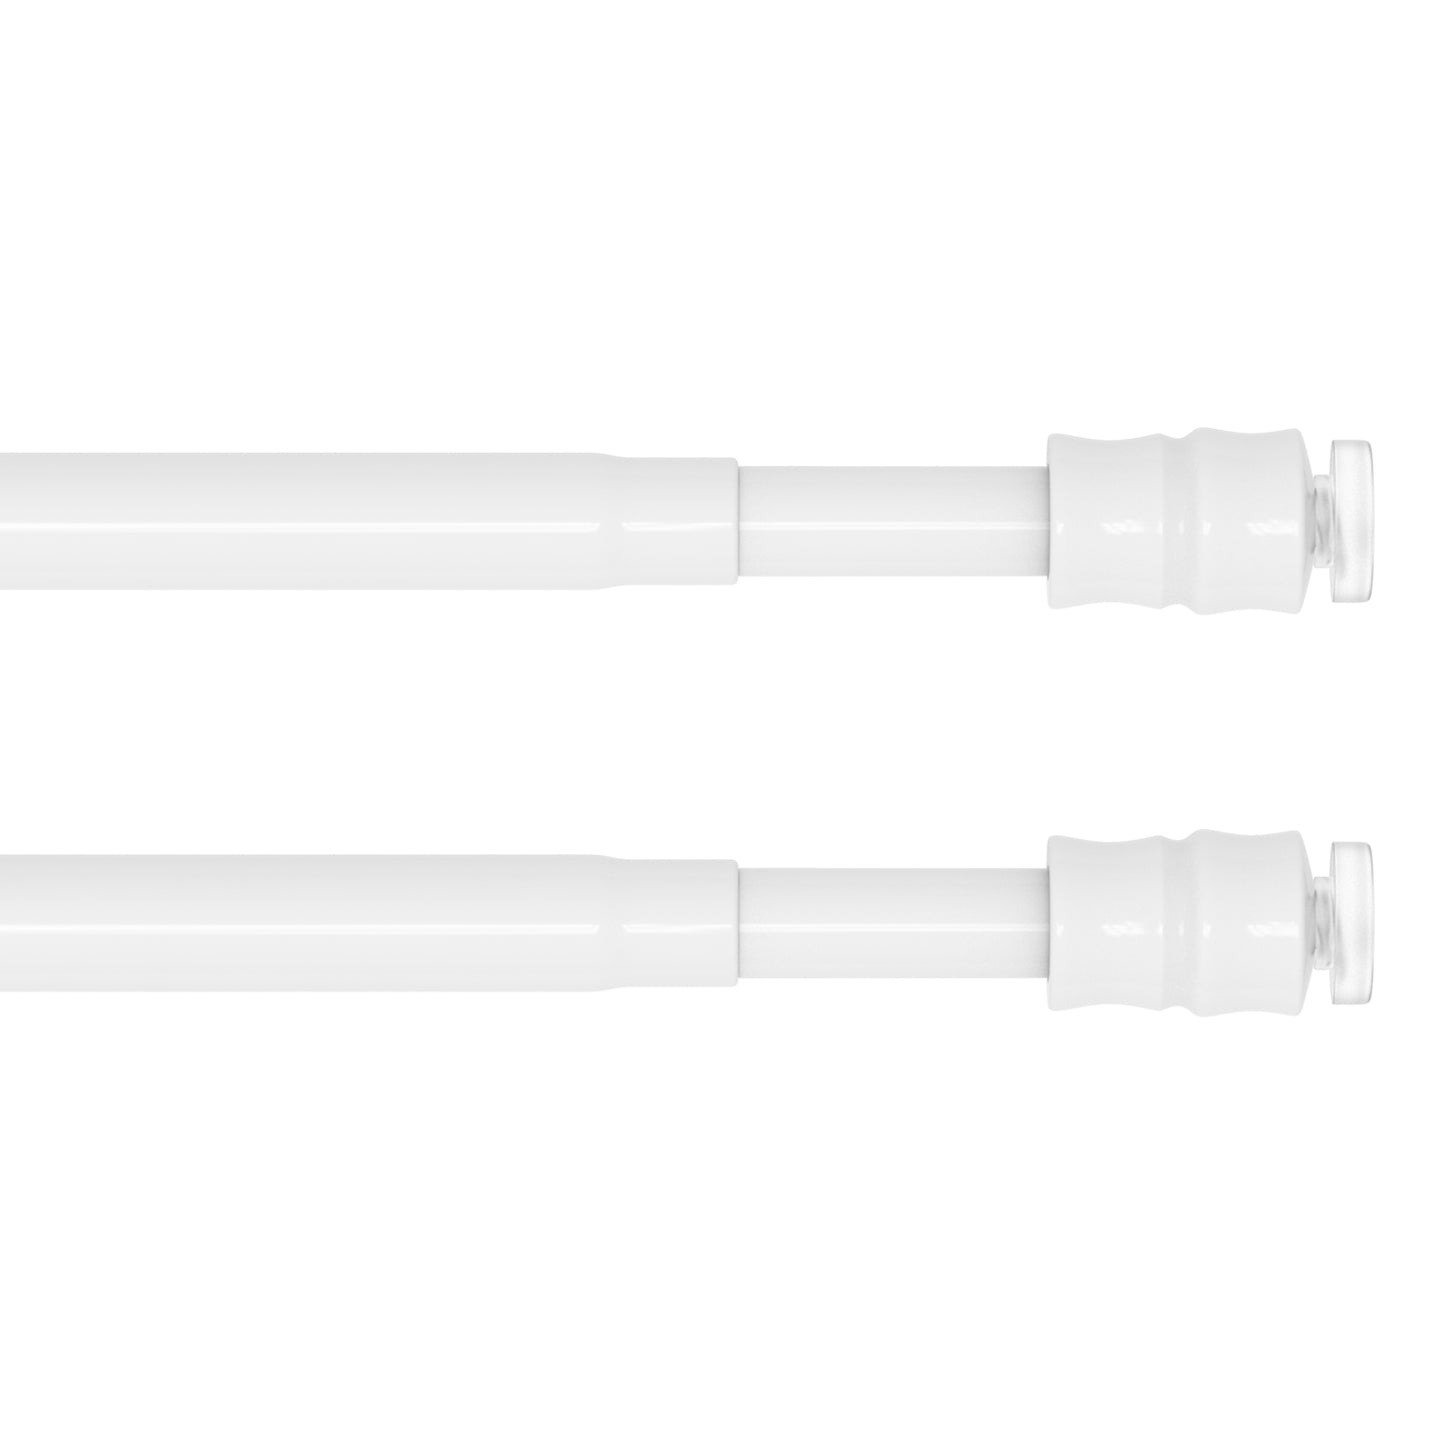 TYRON Slim Spring Tension Rod, 3/8 in. Diameter, Adjustable Skinny Thi